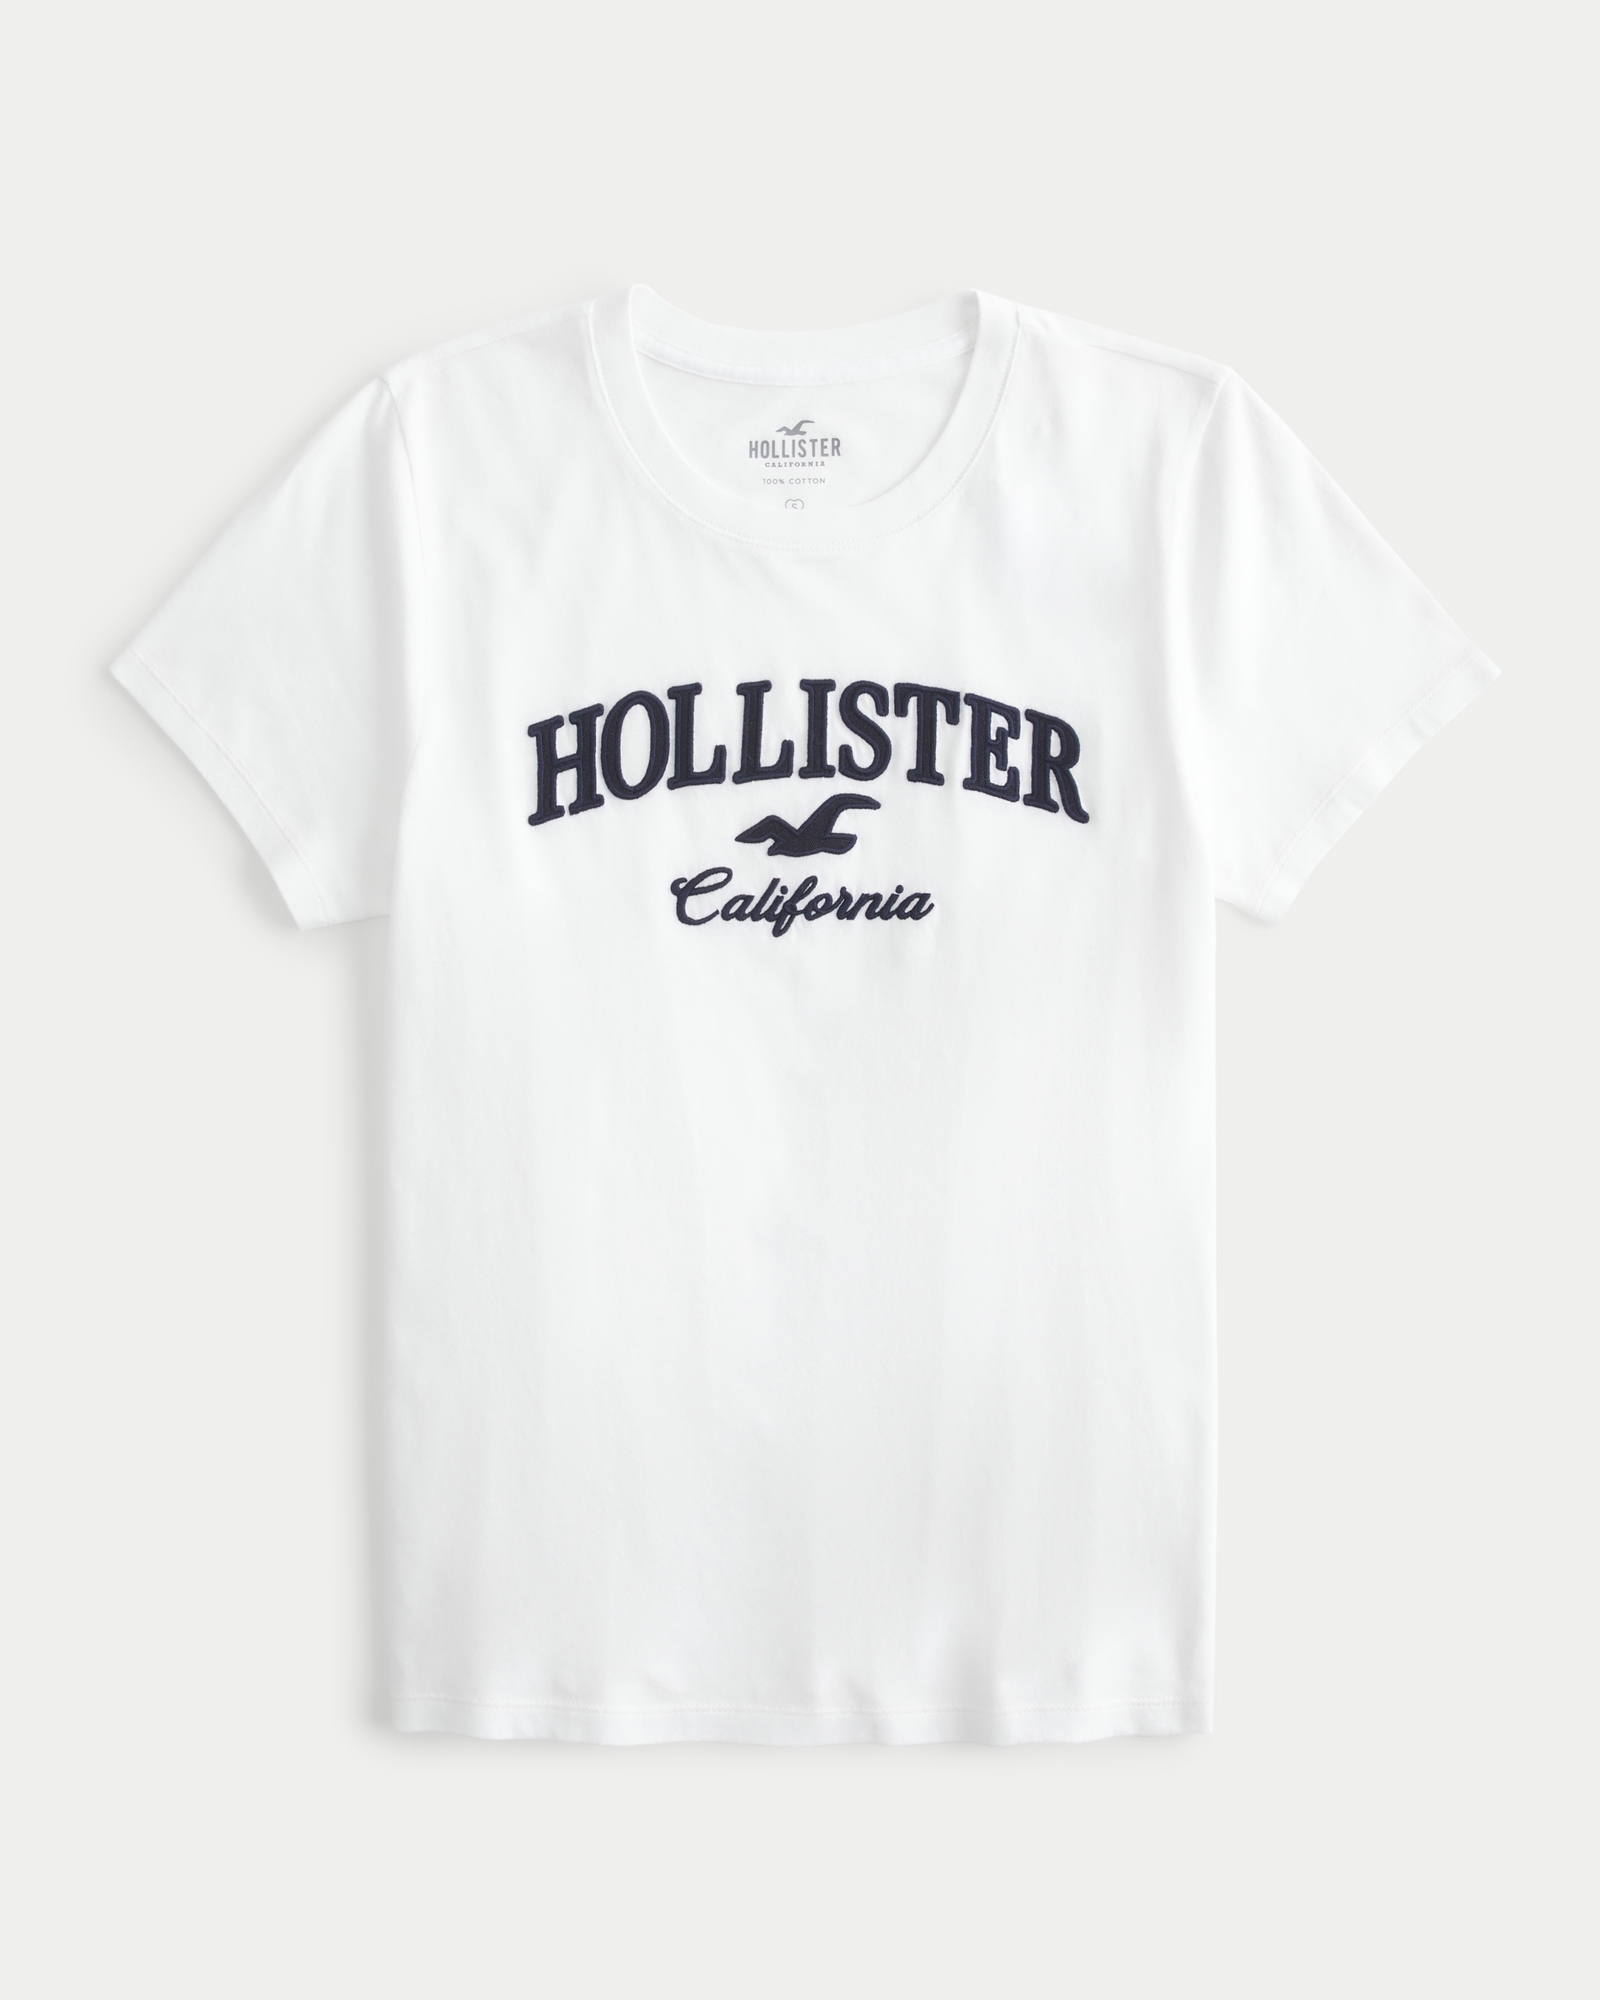 HOLLISTER Womens California Graphic T-Shirt Top UK 14 Large Navy Blue